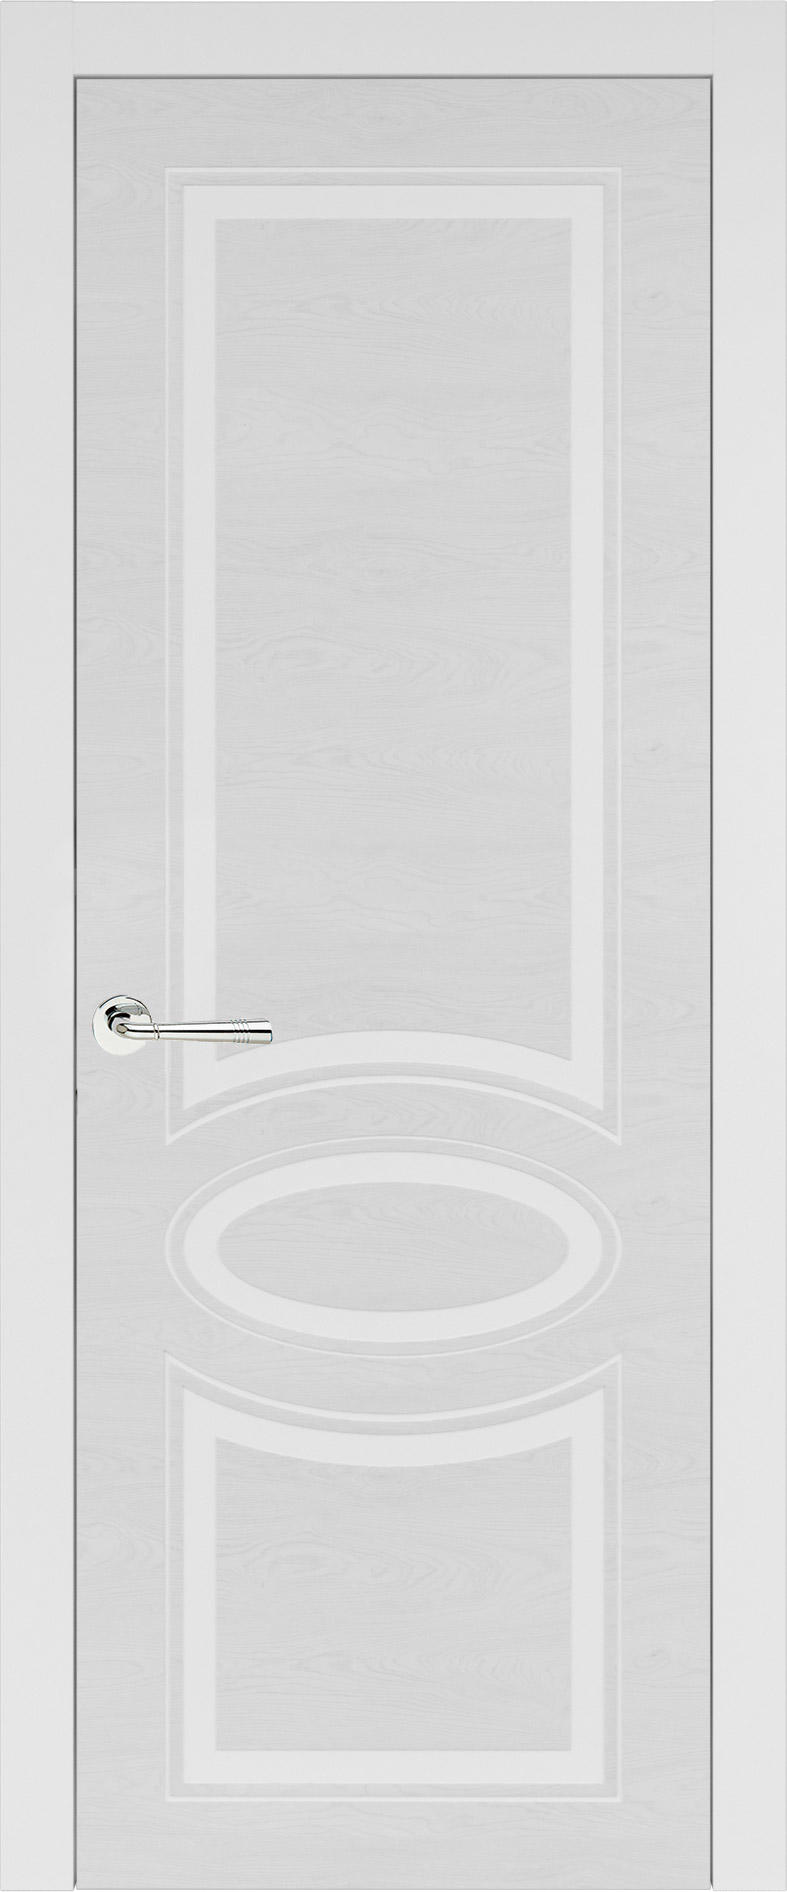 Florencia Neo Classic цвет - Белая эмаль по шпону (RAL 9003) Без стекла (ДГ)